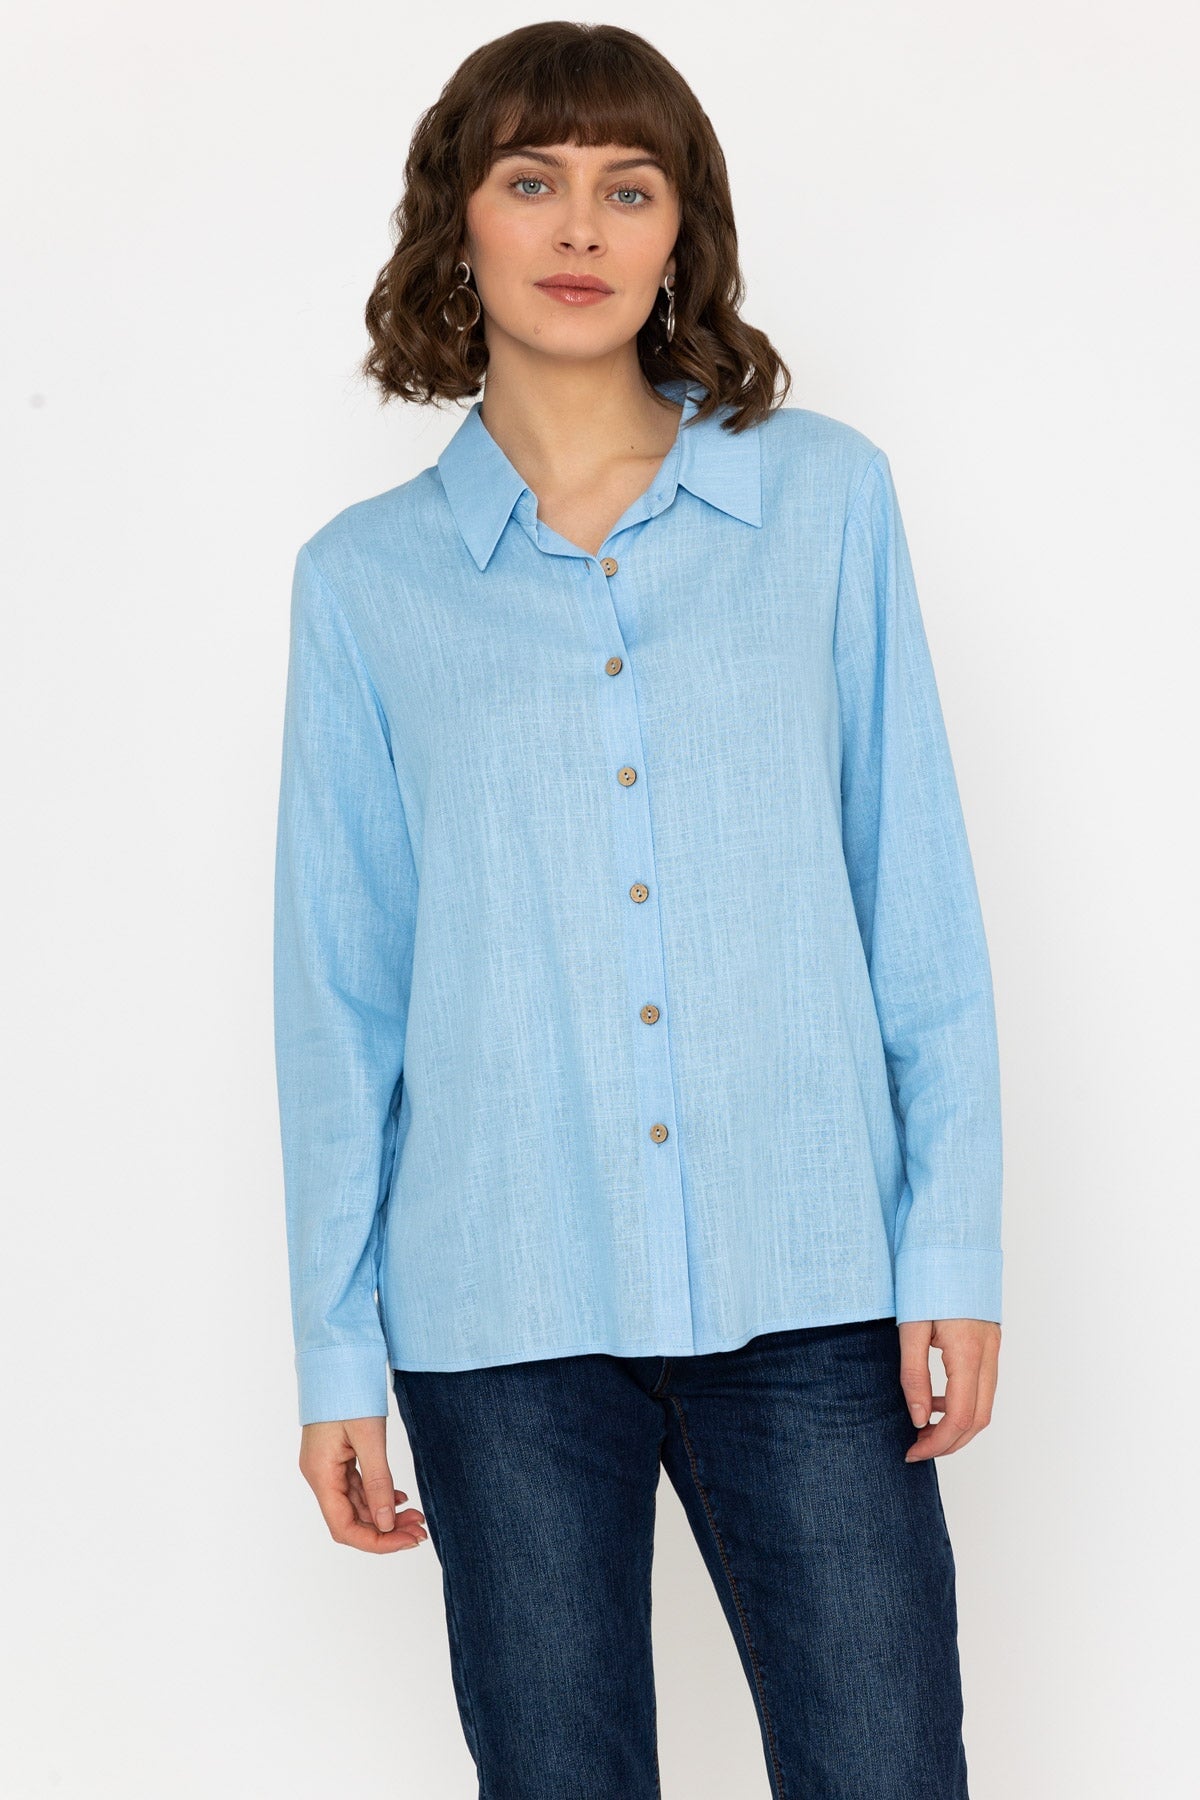 Linen Like Shirt in Blue